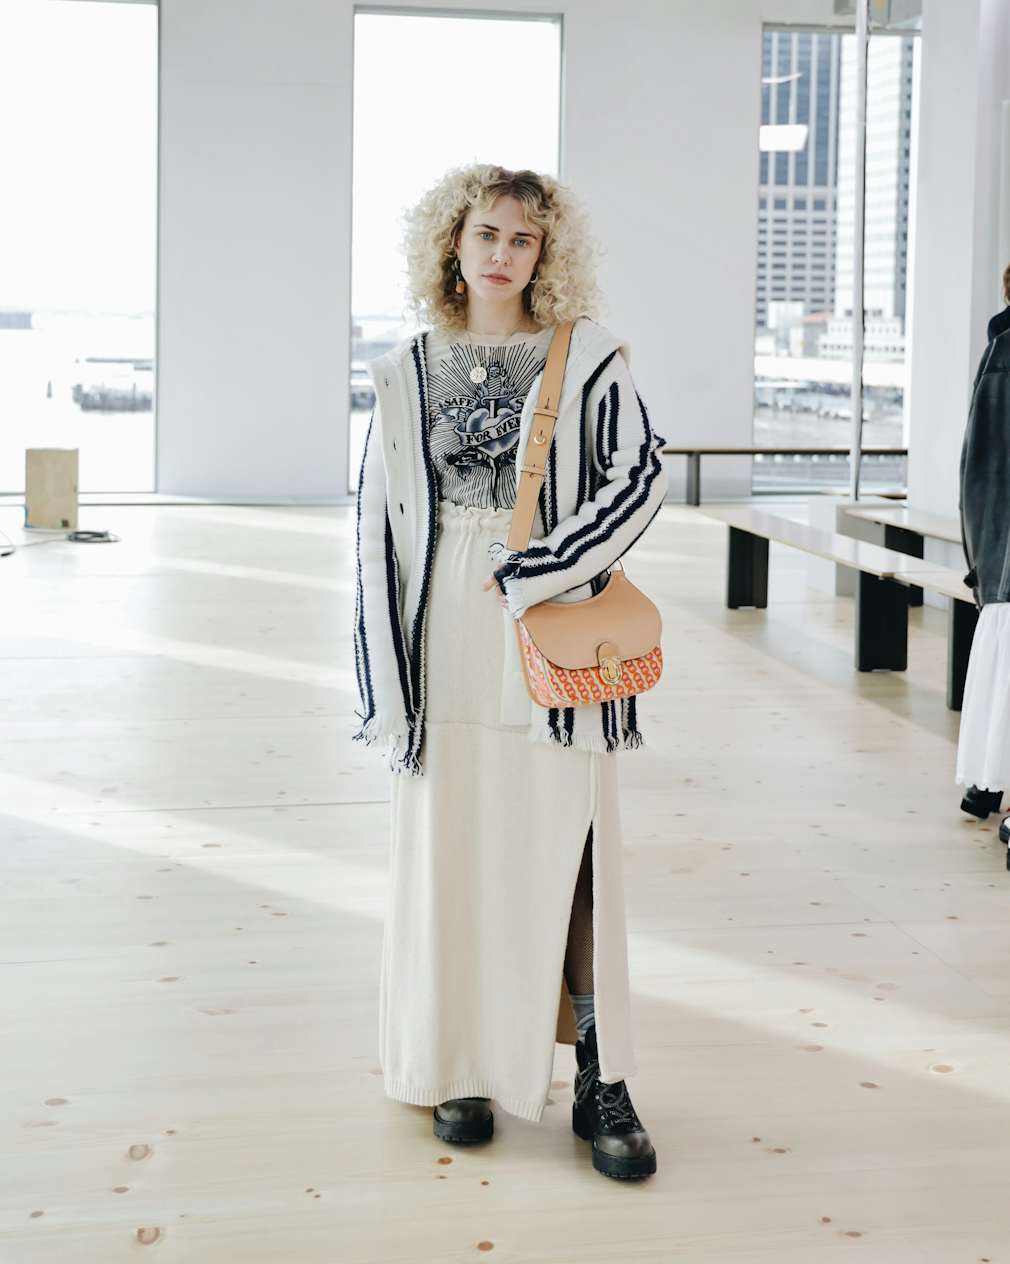 Courtney Trop Judges New York Fashion Week, as Always | News | CFDA